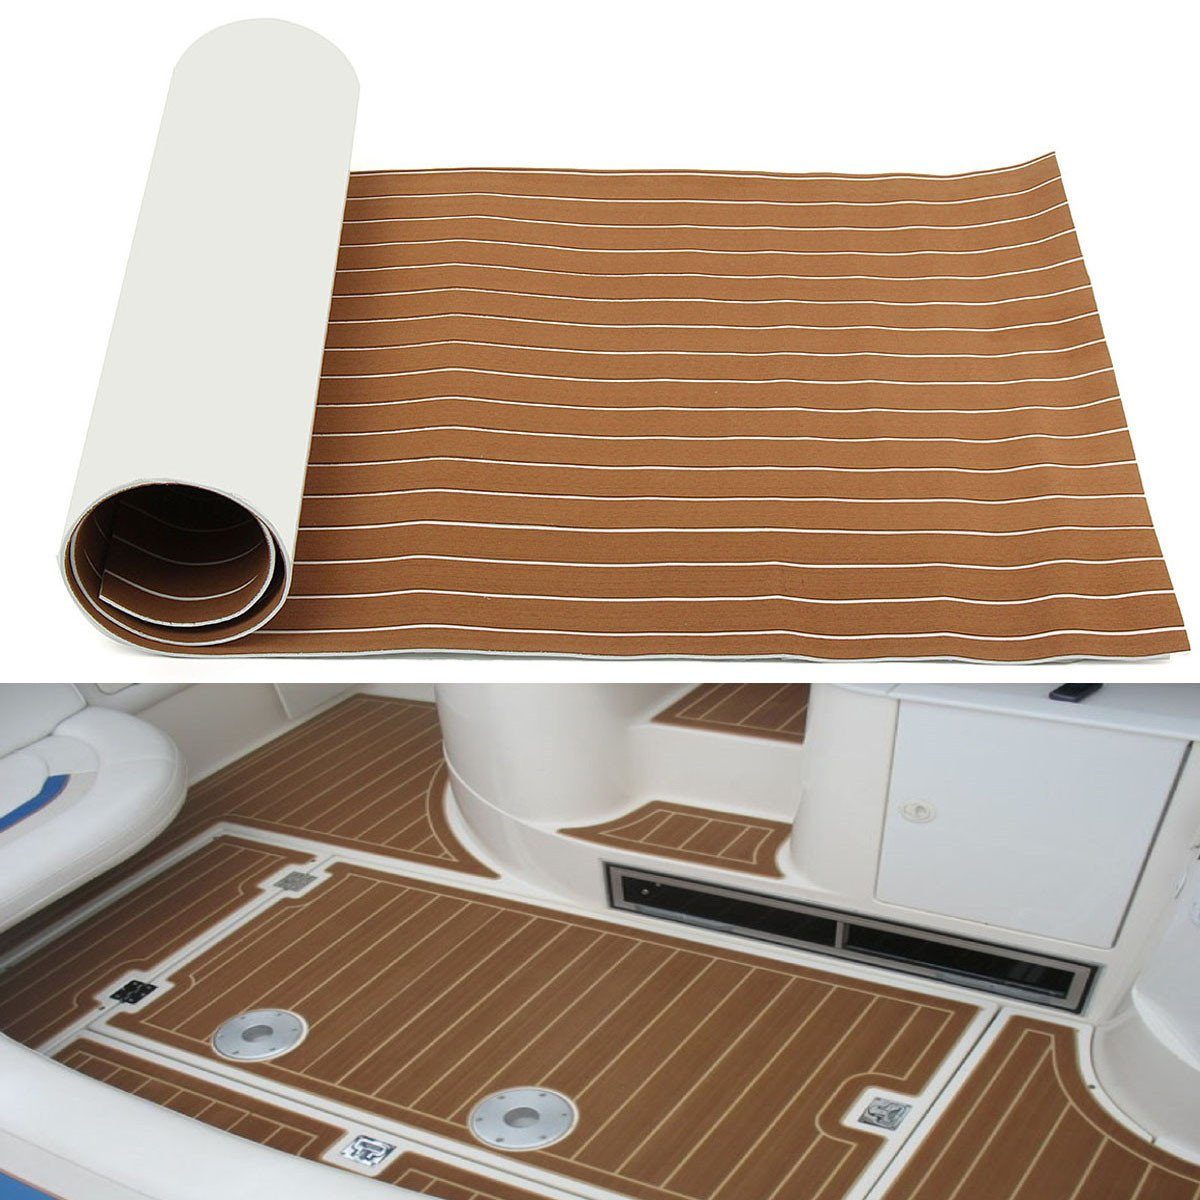 Insma Bodenmatte (1-St., 240x90cm, 6mm), EVA Schaum Boot Yacht Deck Bodenbelag Matte Teppich Pad Selbstklebend Braun